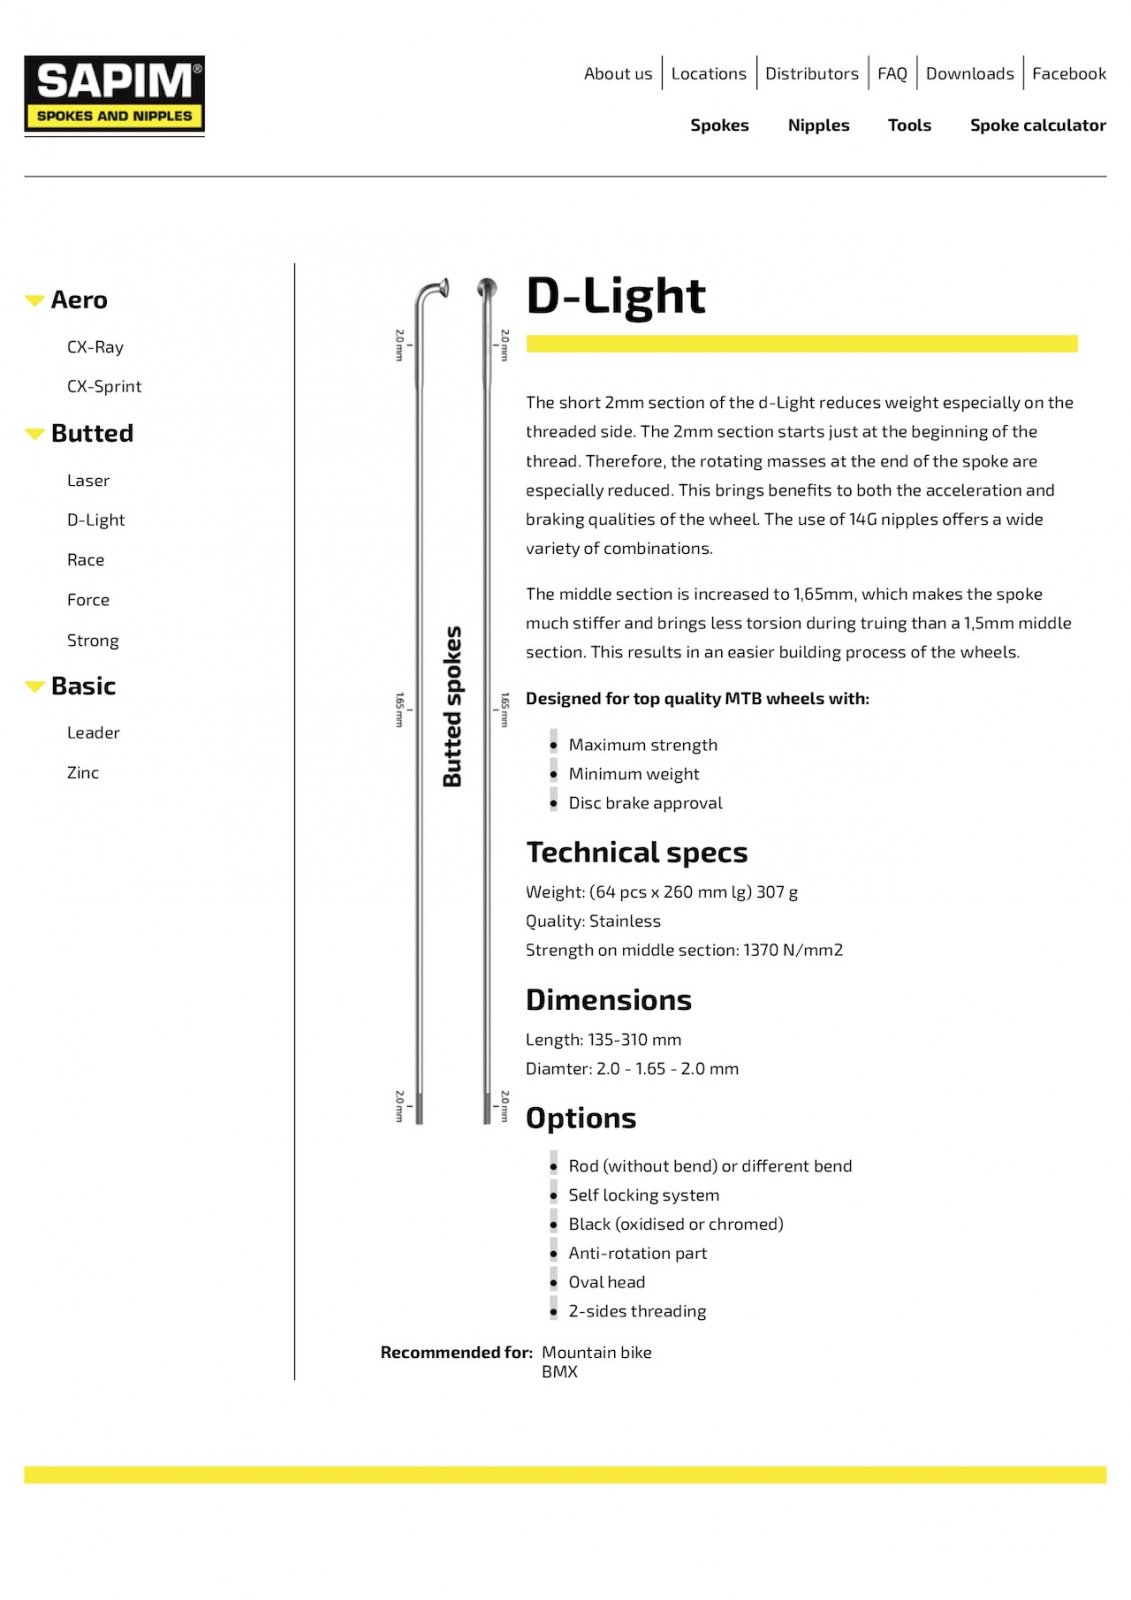 D-Light | Sapim.jpg